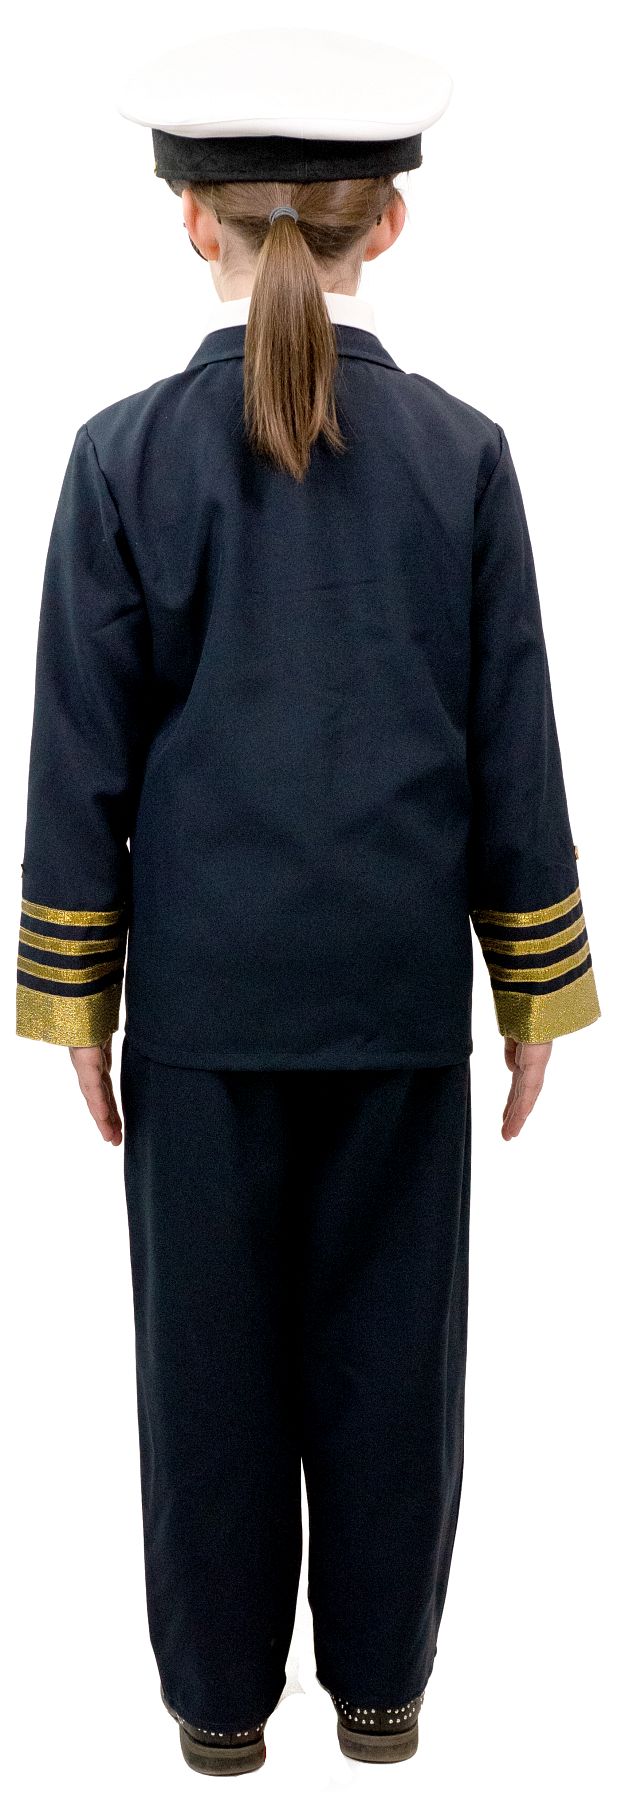 American naval officer